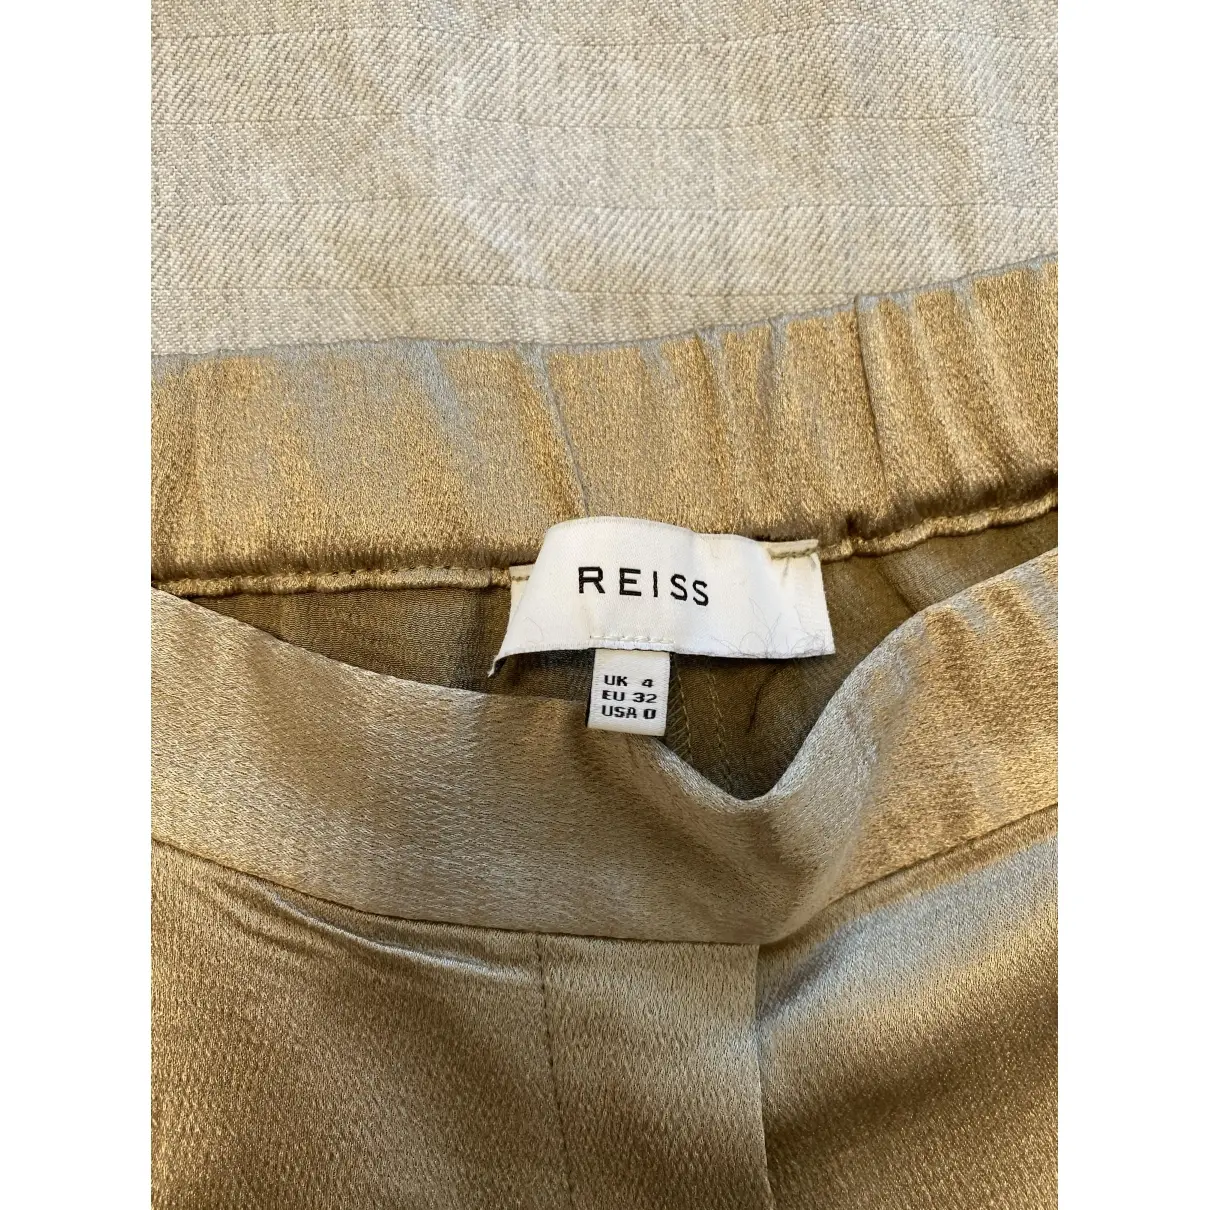 Buy Reiss Silk straight pants online